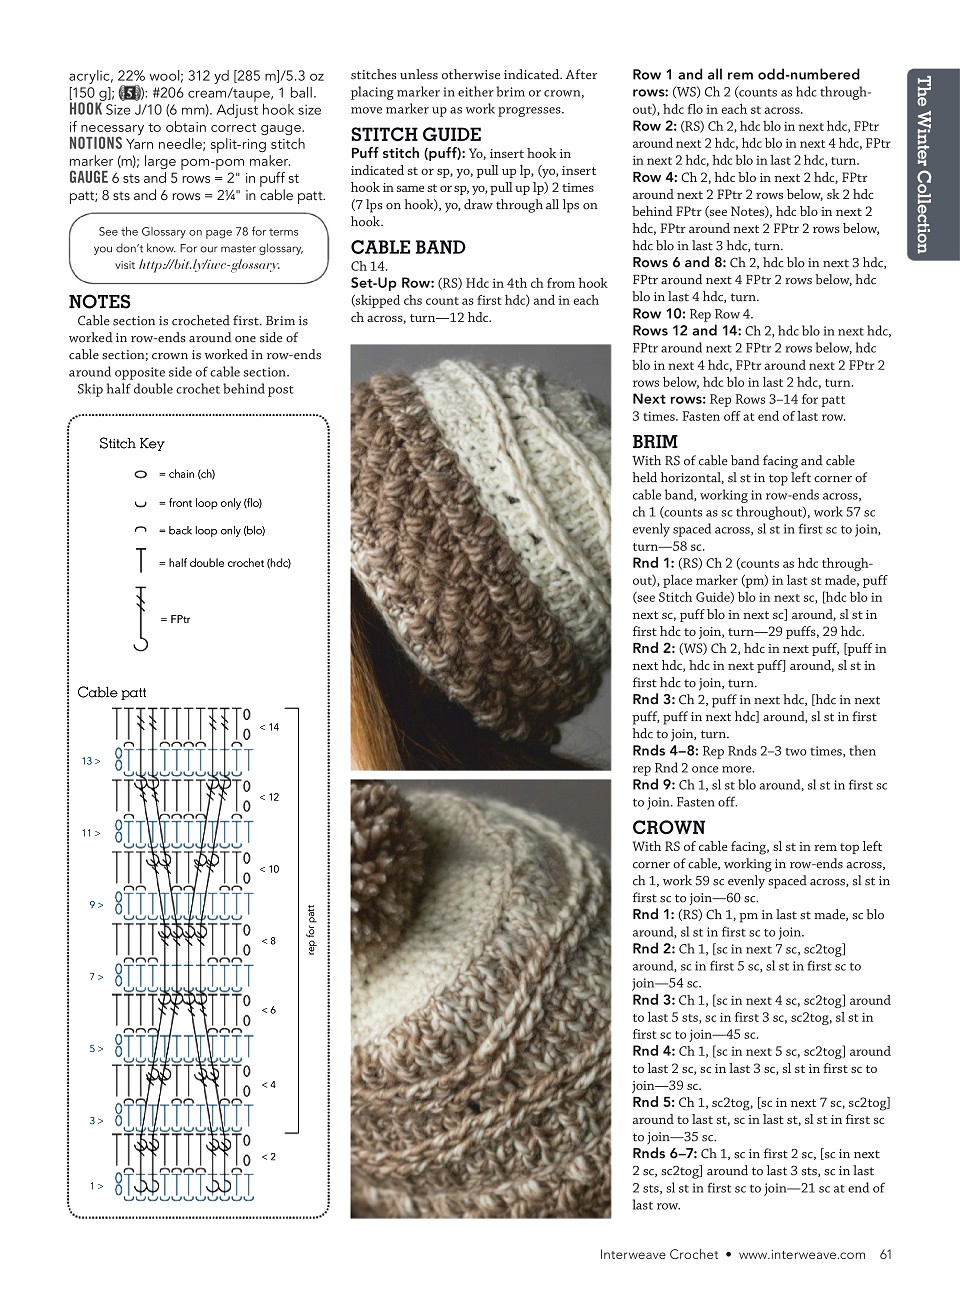 Interweave Crochet Winter 2019-62